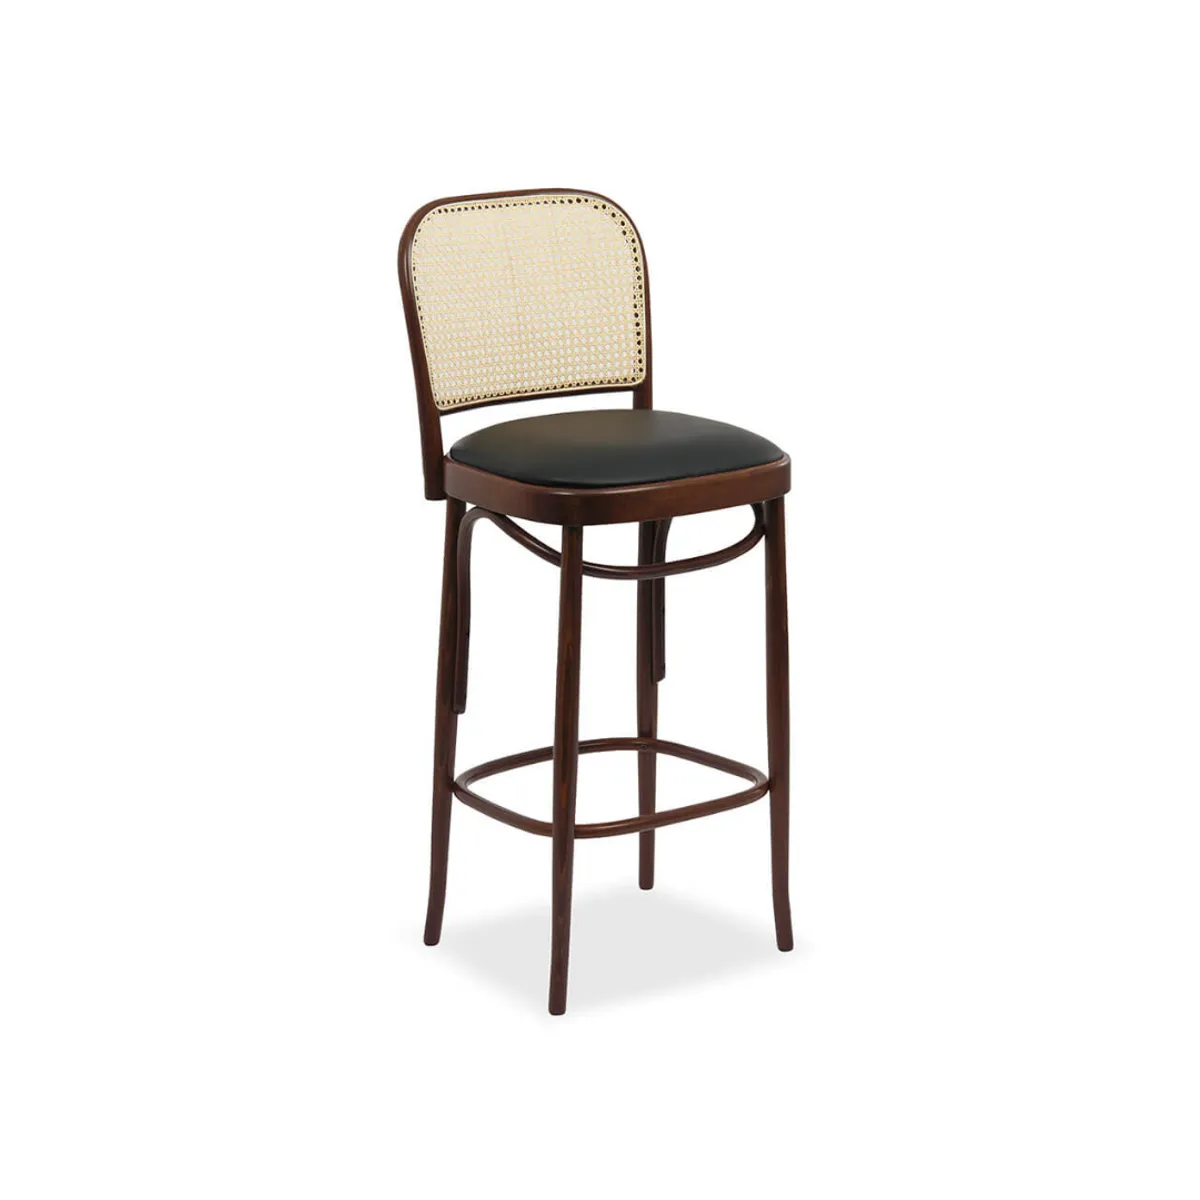 Potts bar stool 1